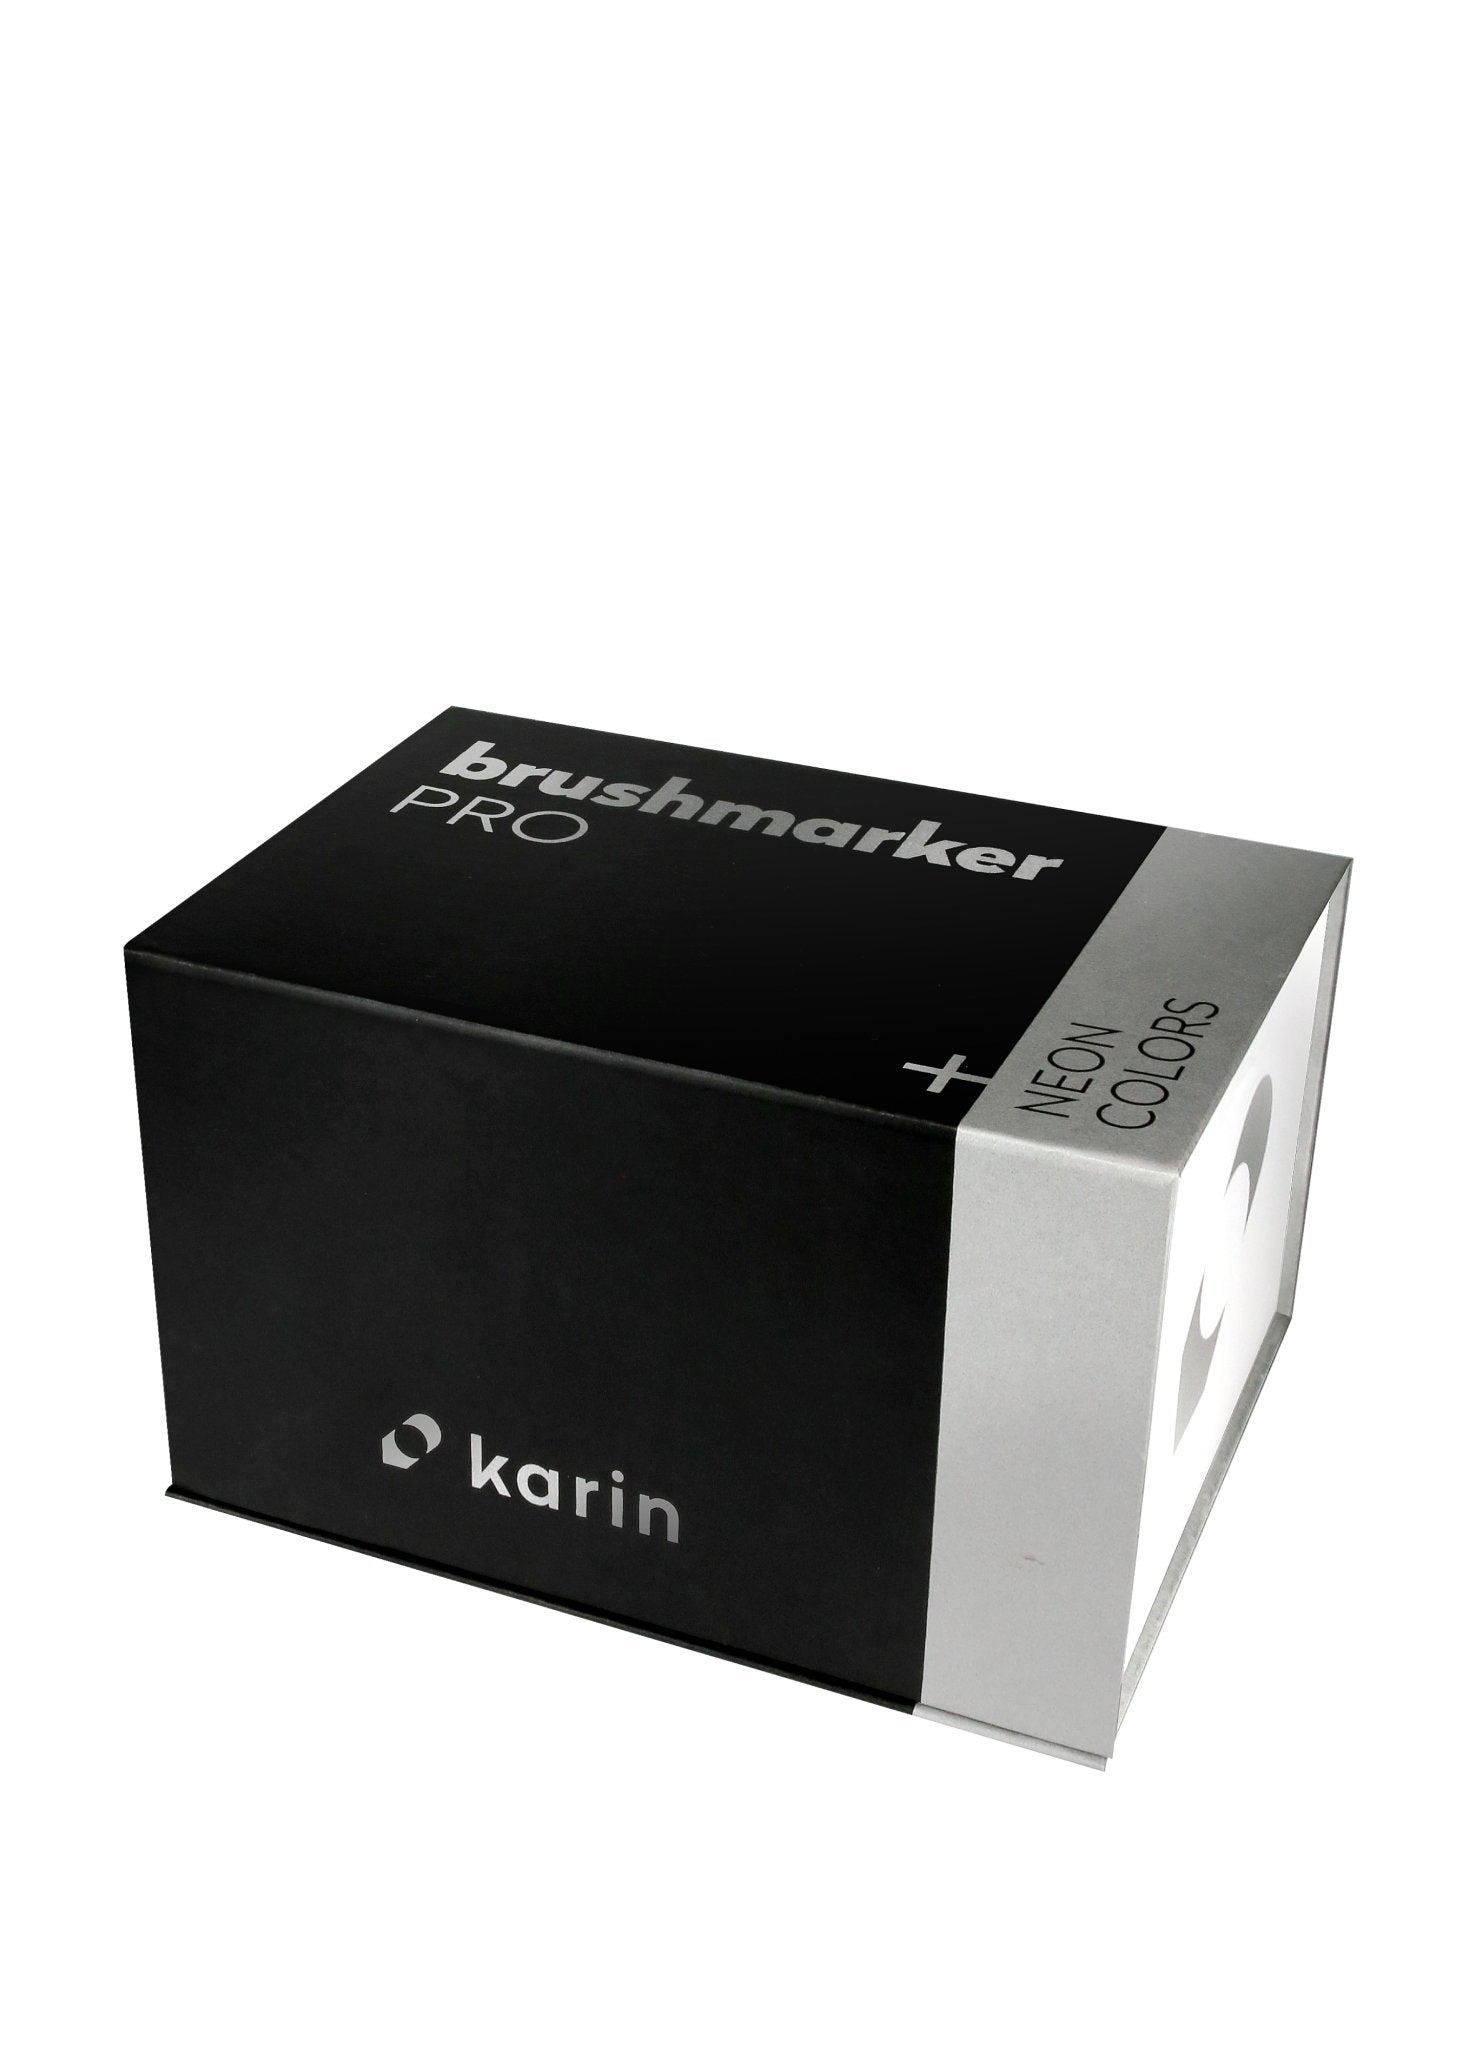 Karin Brushmarker PRO MiniBox Set of 26 Colors & Blender